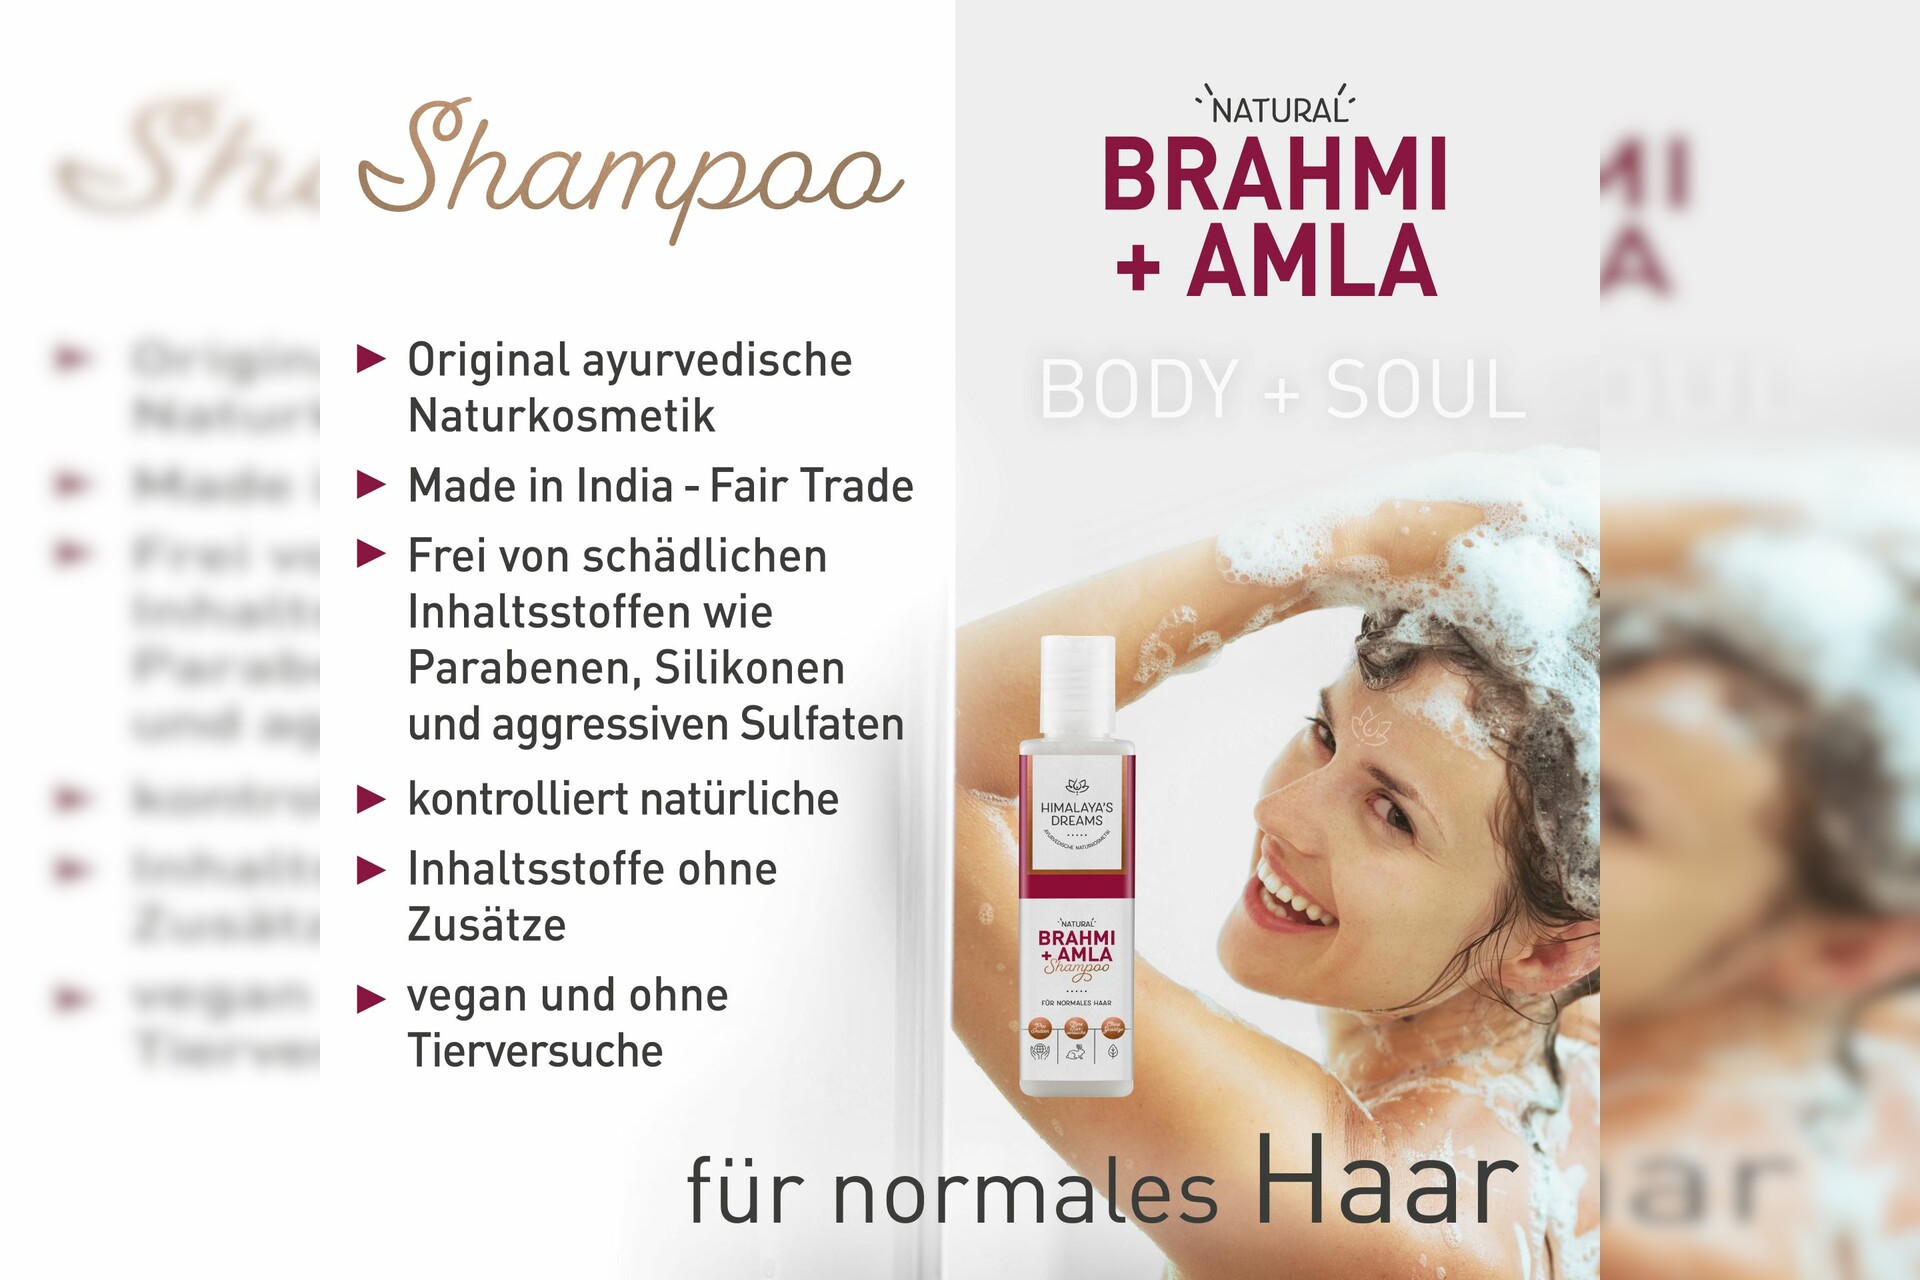 Ayurveda Shampoo Brahmi & Amla